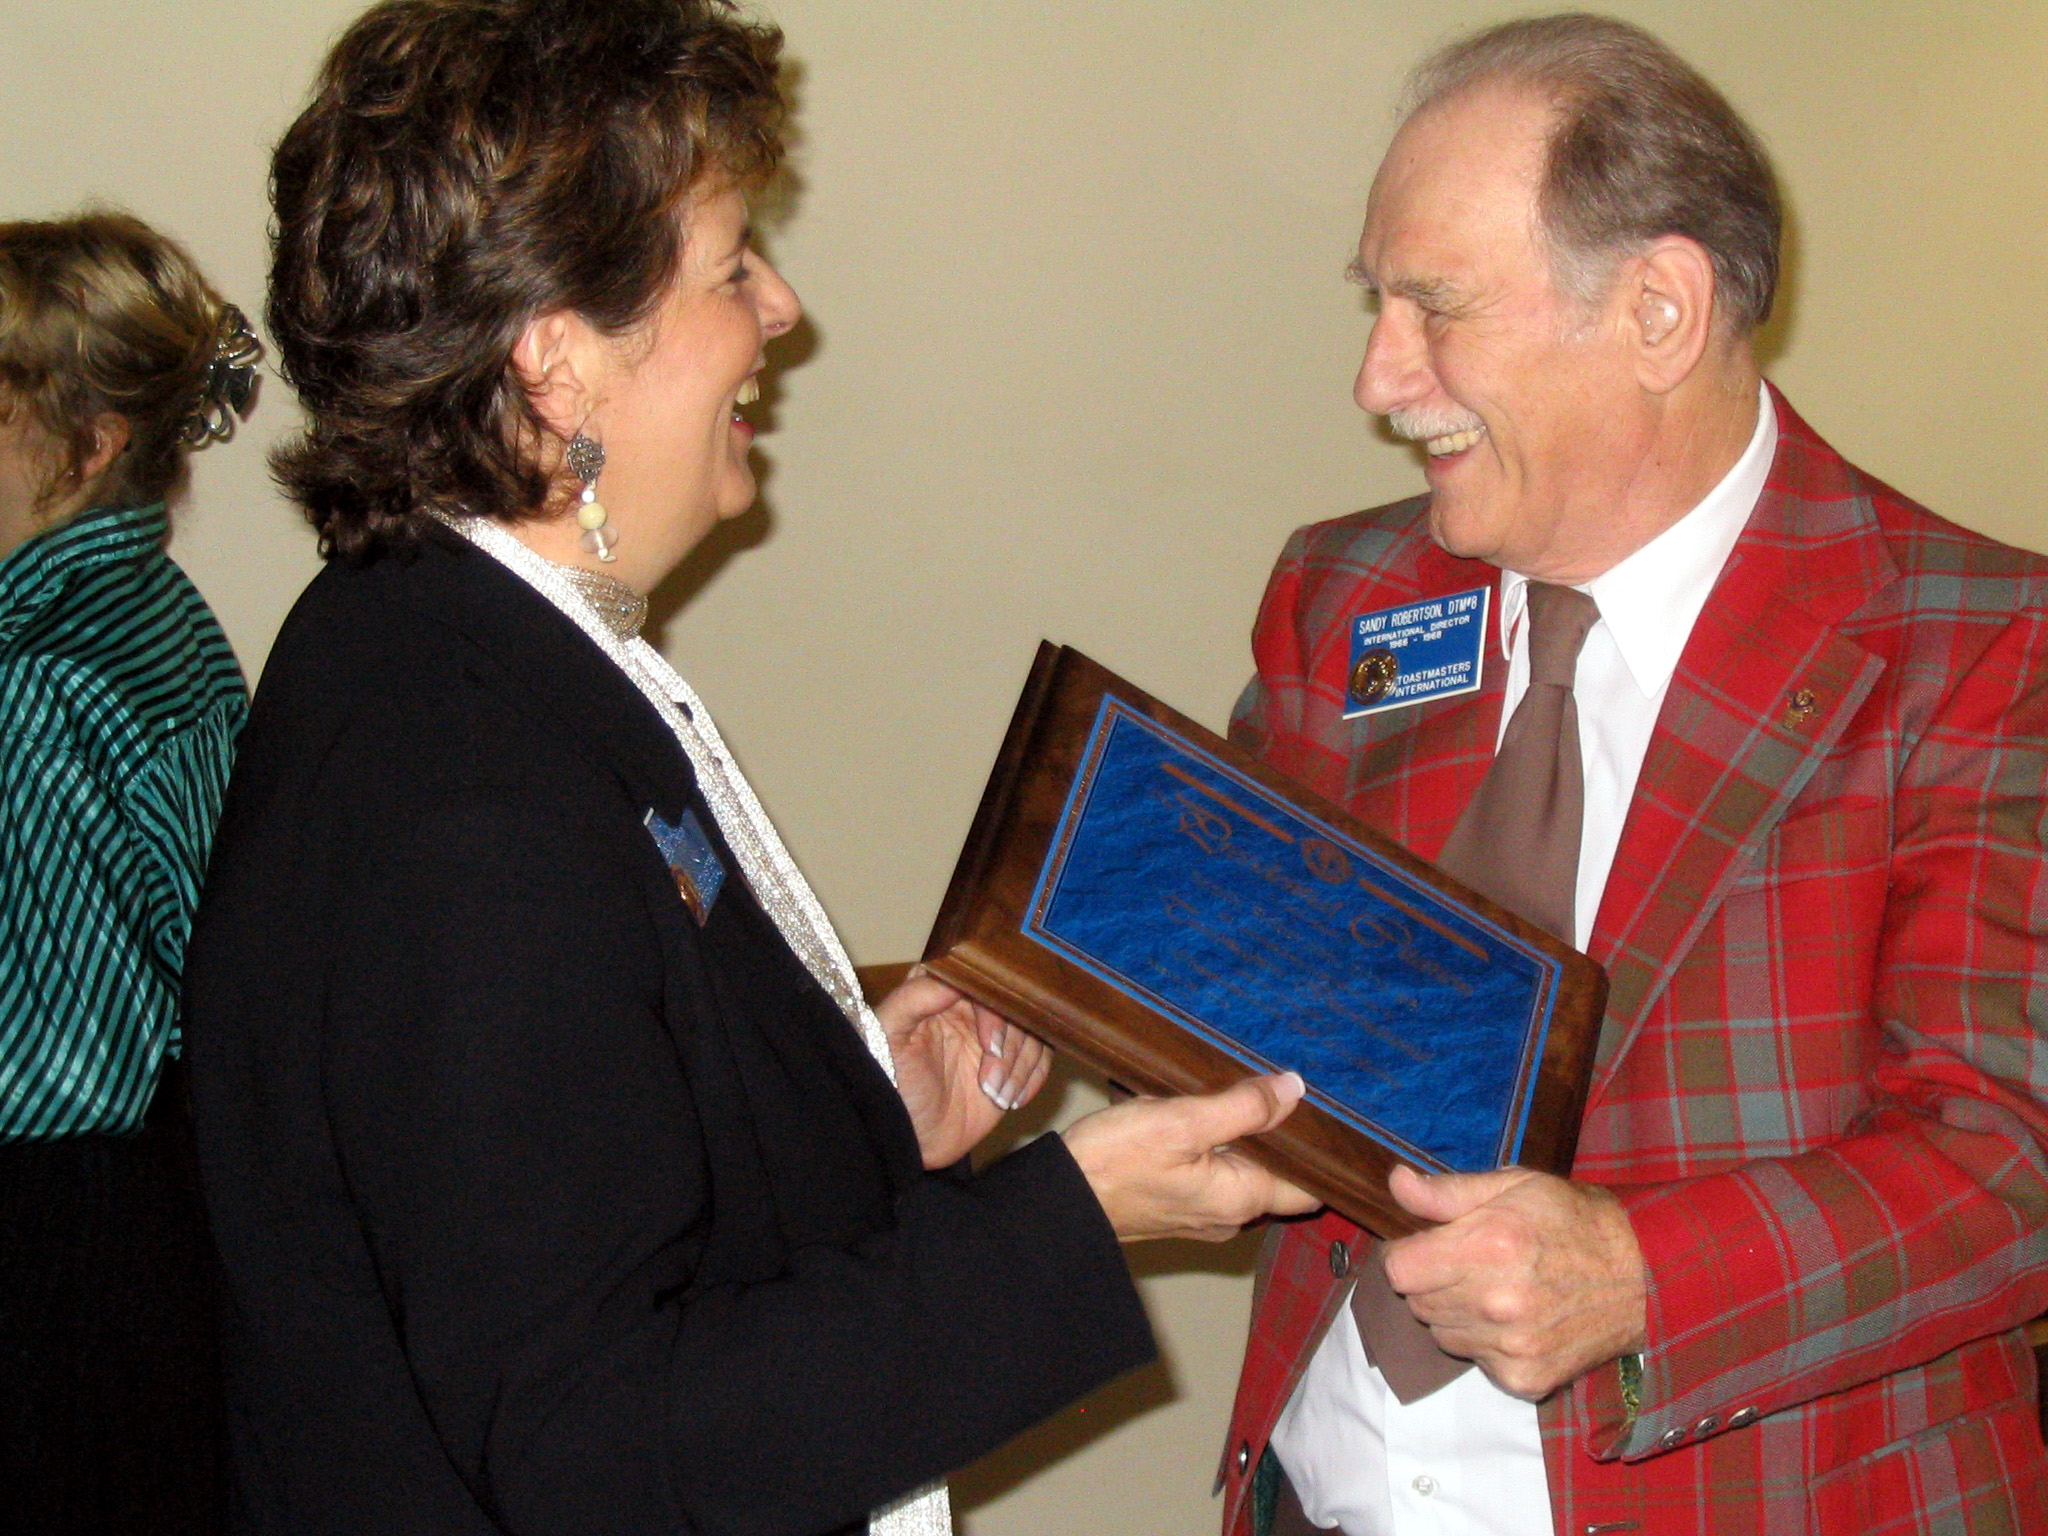 Pat Johnson presents Sandy's Presidential Citation on October 15, 2005